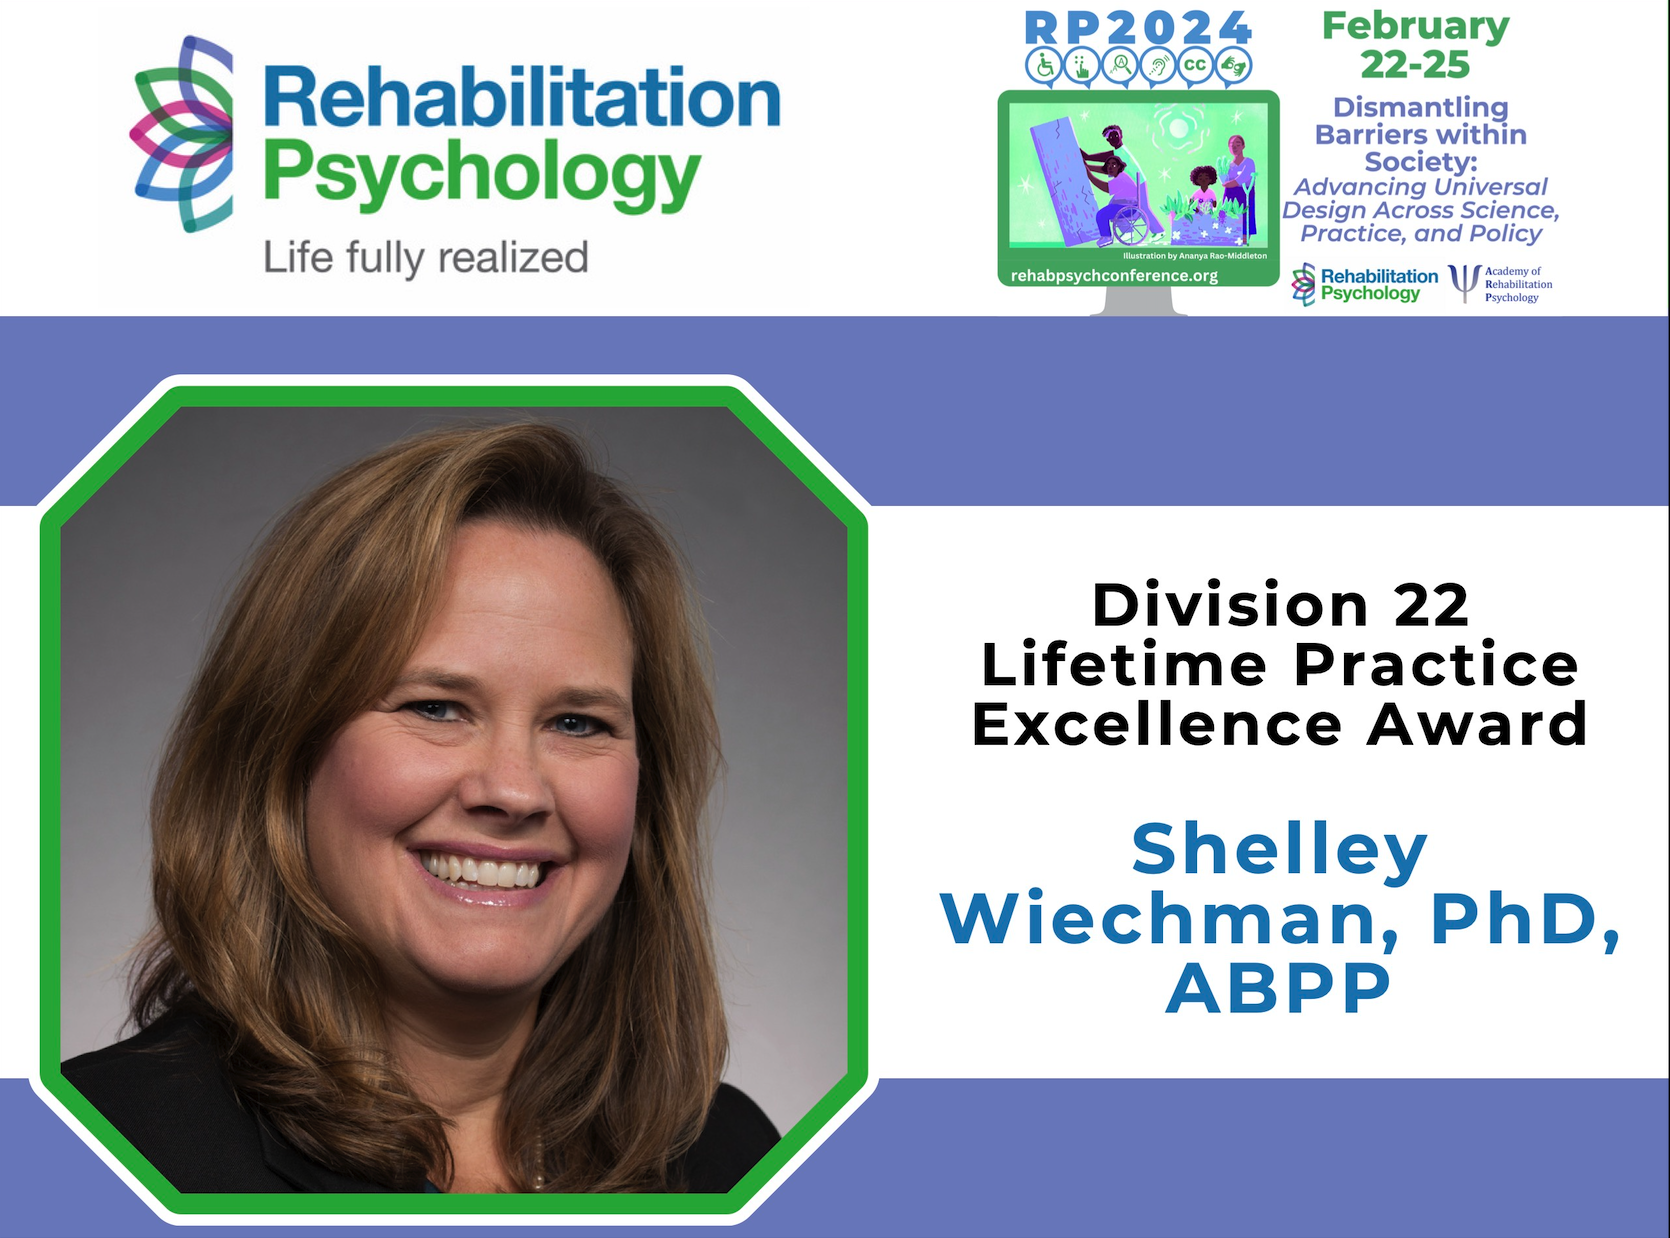 Division 22 Lifetime Practice Excellence Award Shelley Wiechman, PhD, ABPP